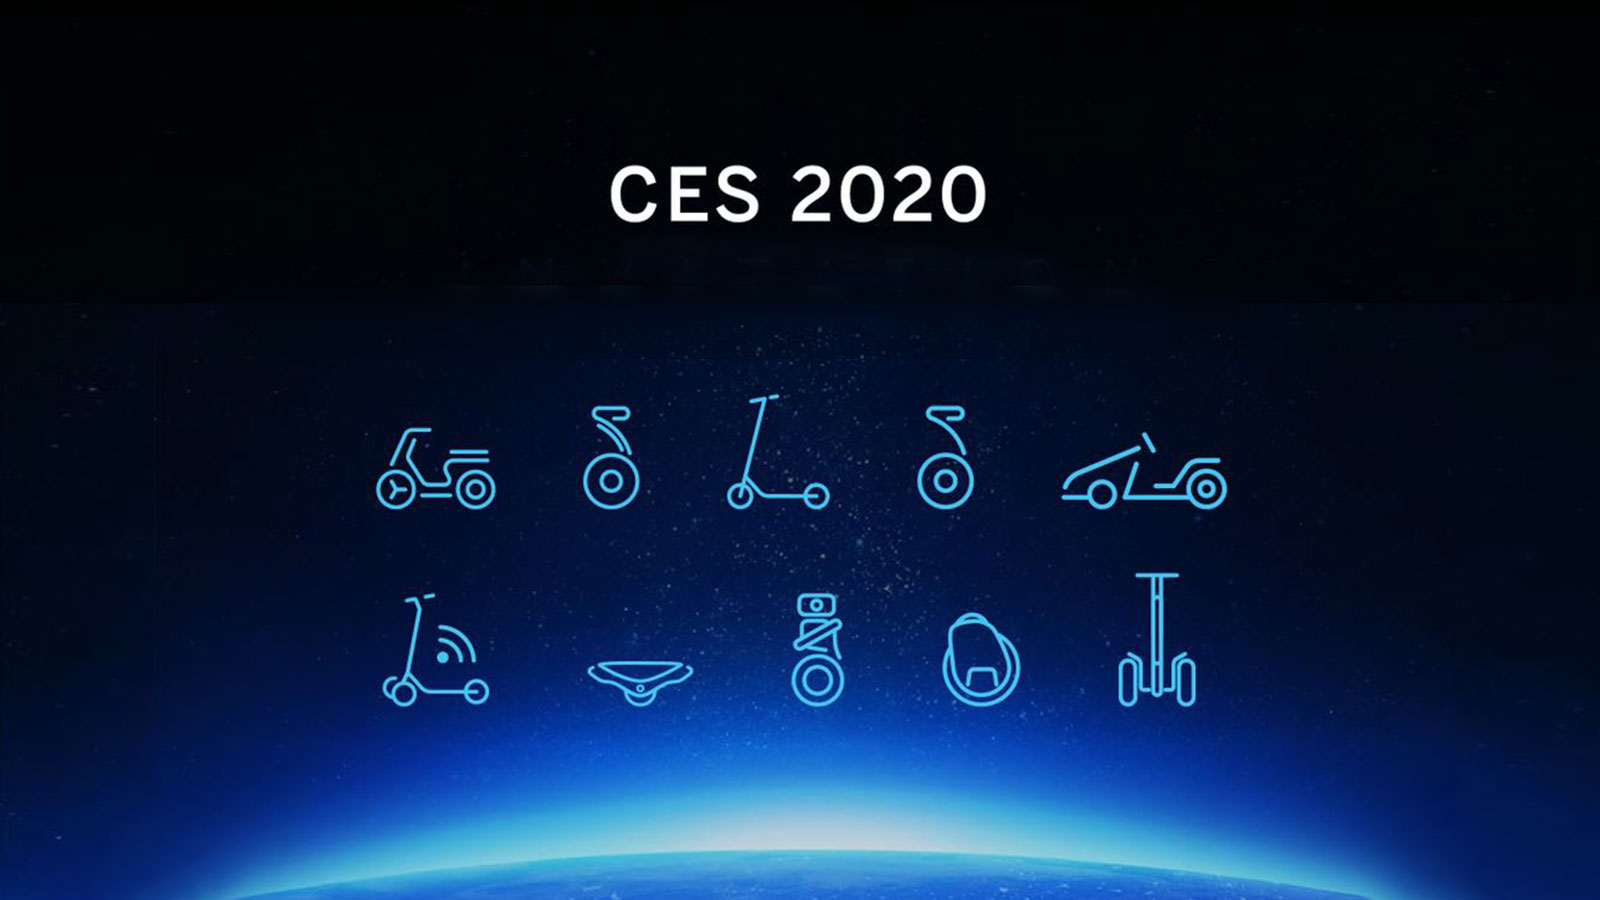 Segway-Ninebot x CES 2020